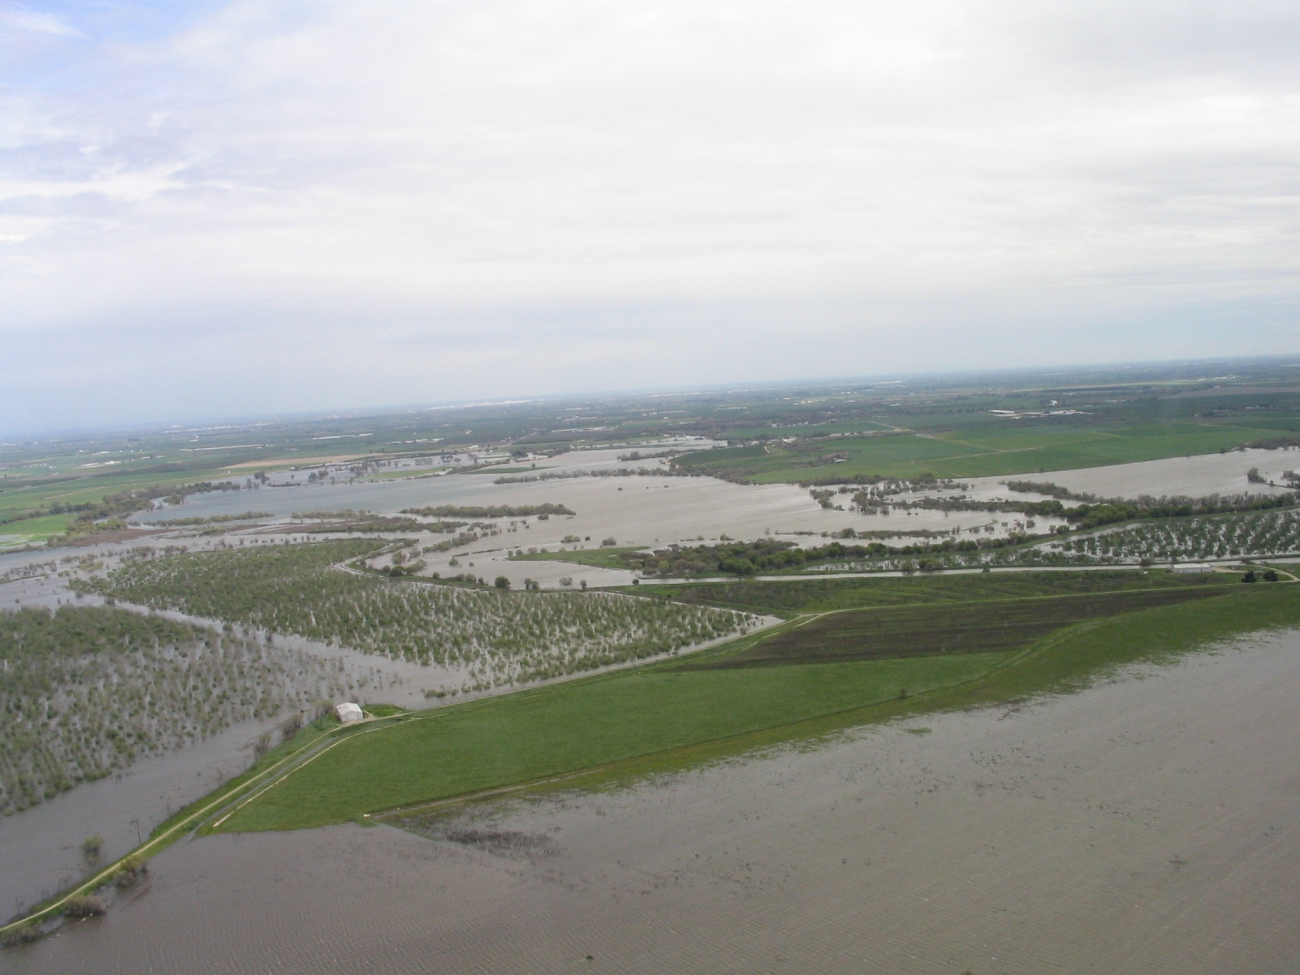 Flooding of farmlands along the San Joaquin River